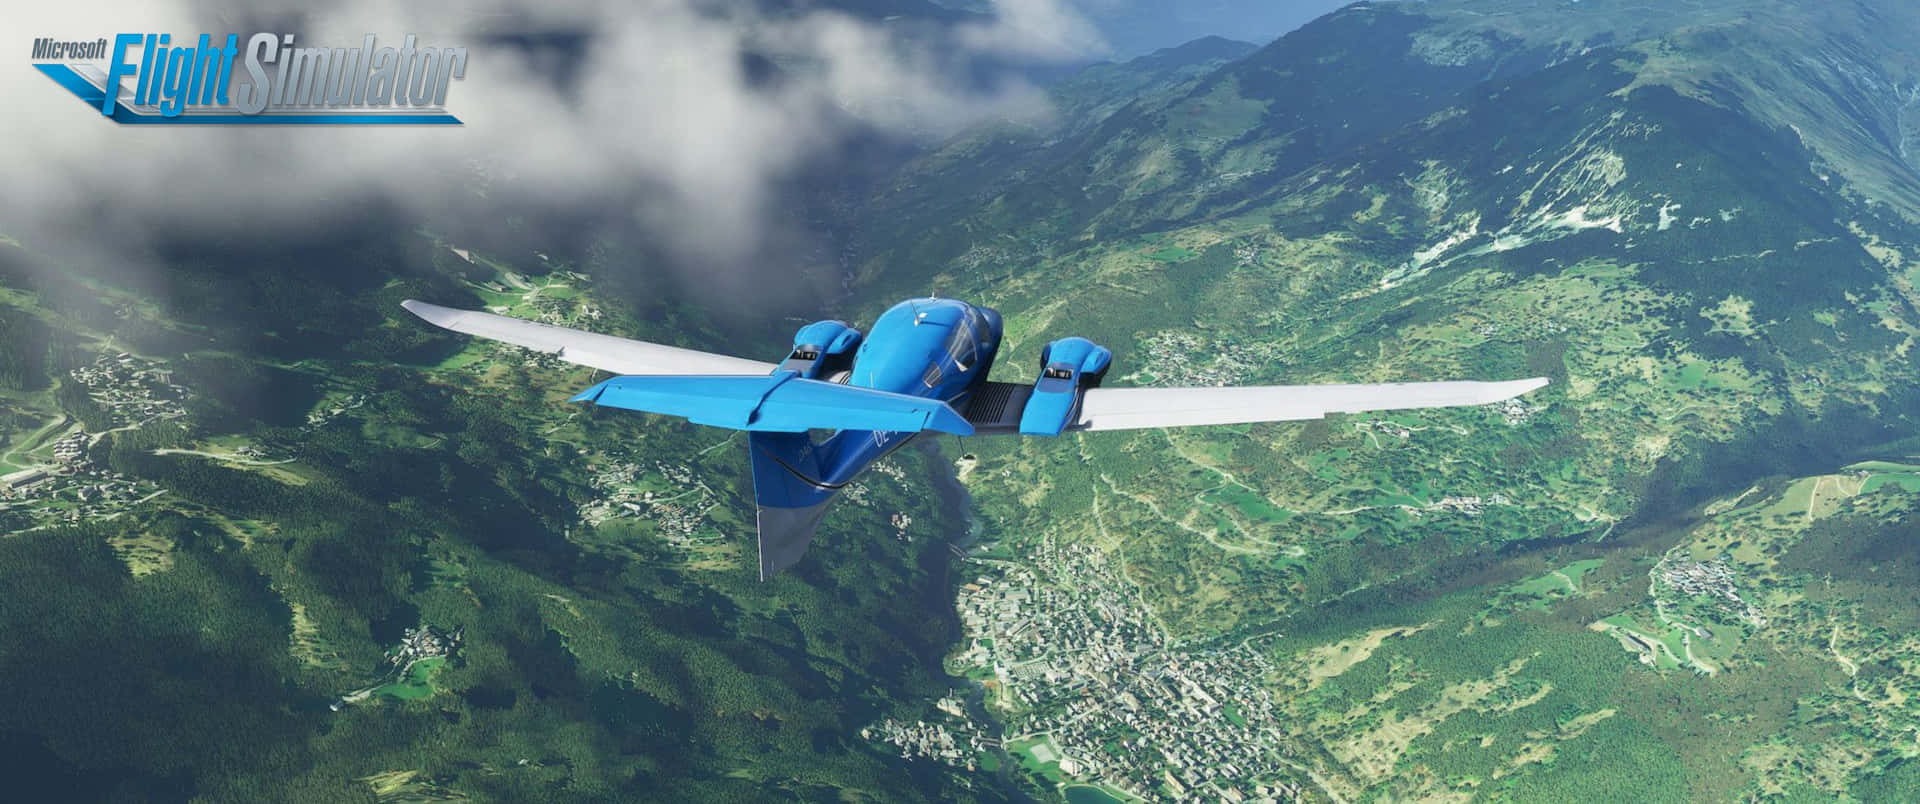 Take the Skies with the Microsoft Flight Simulator